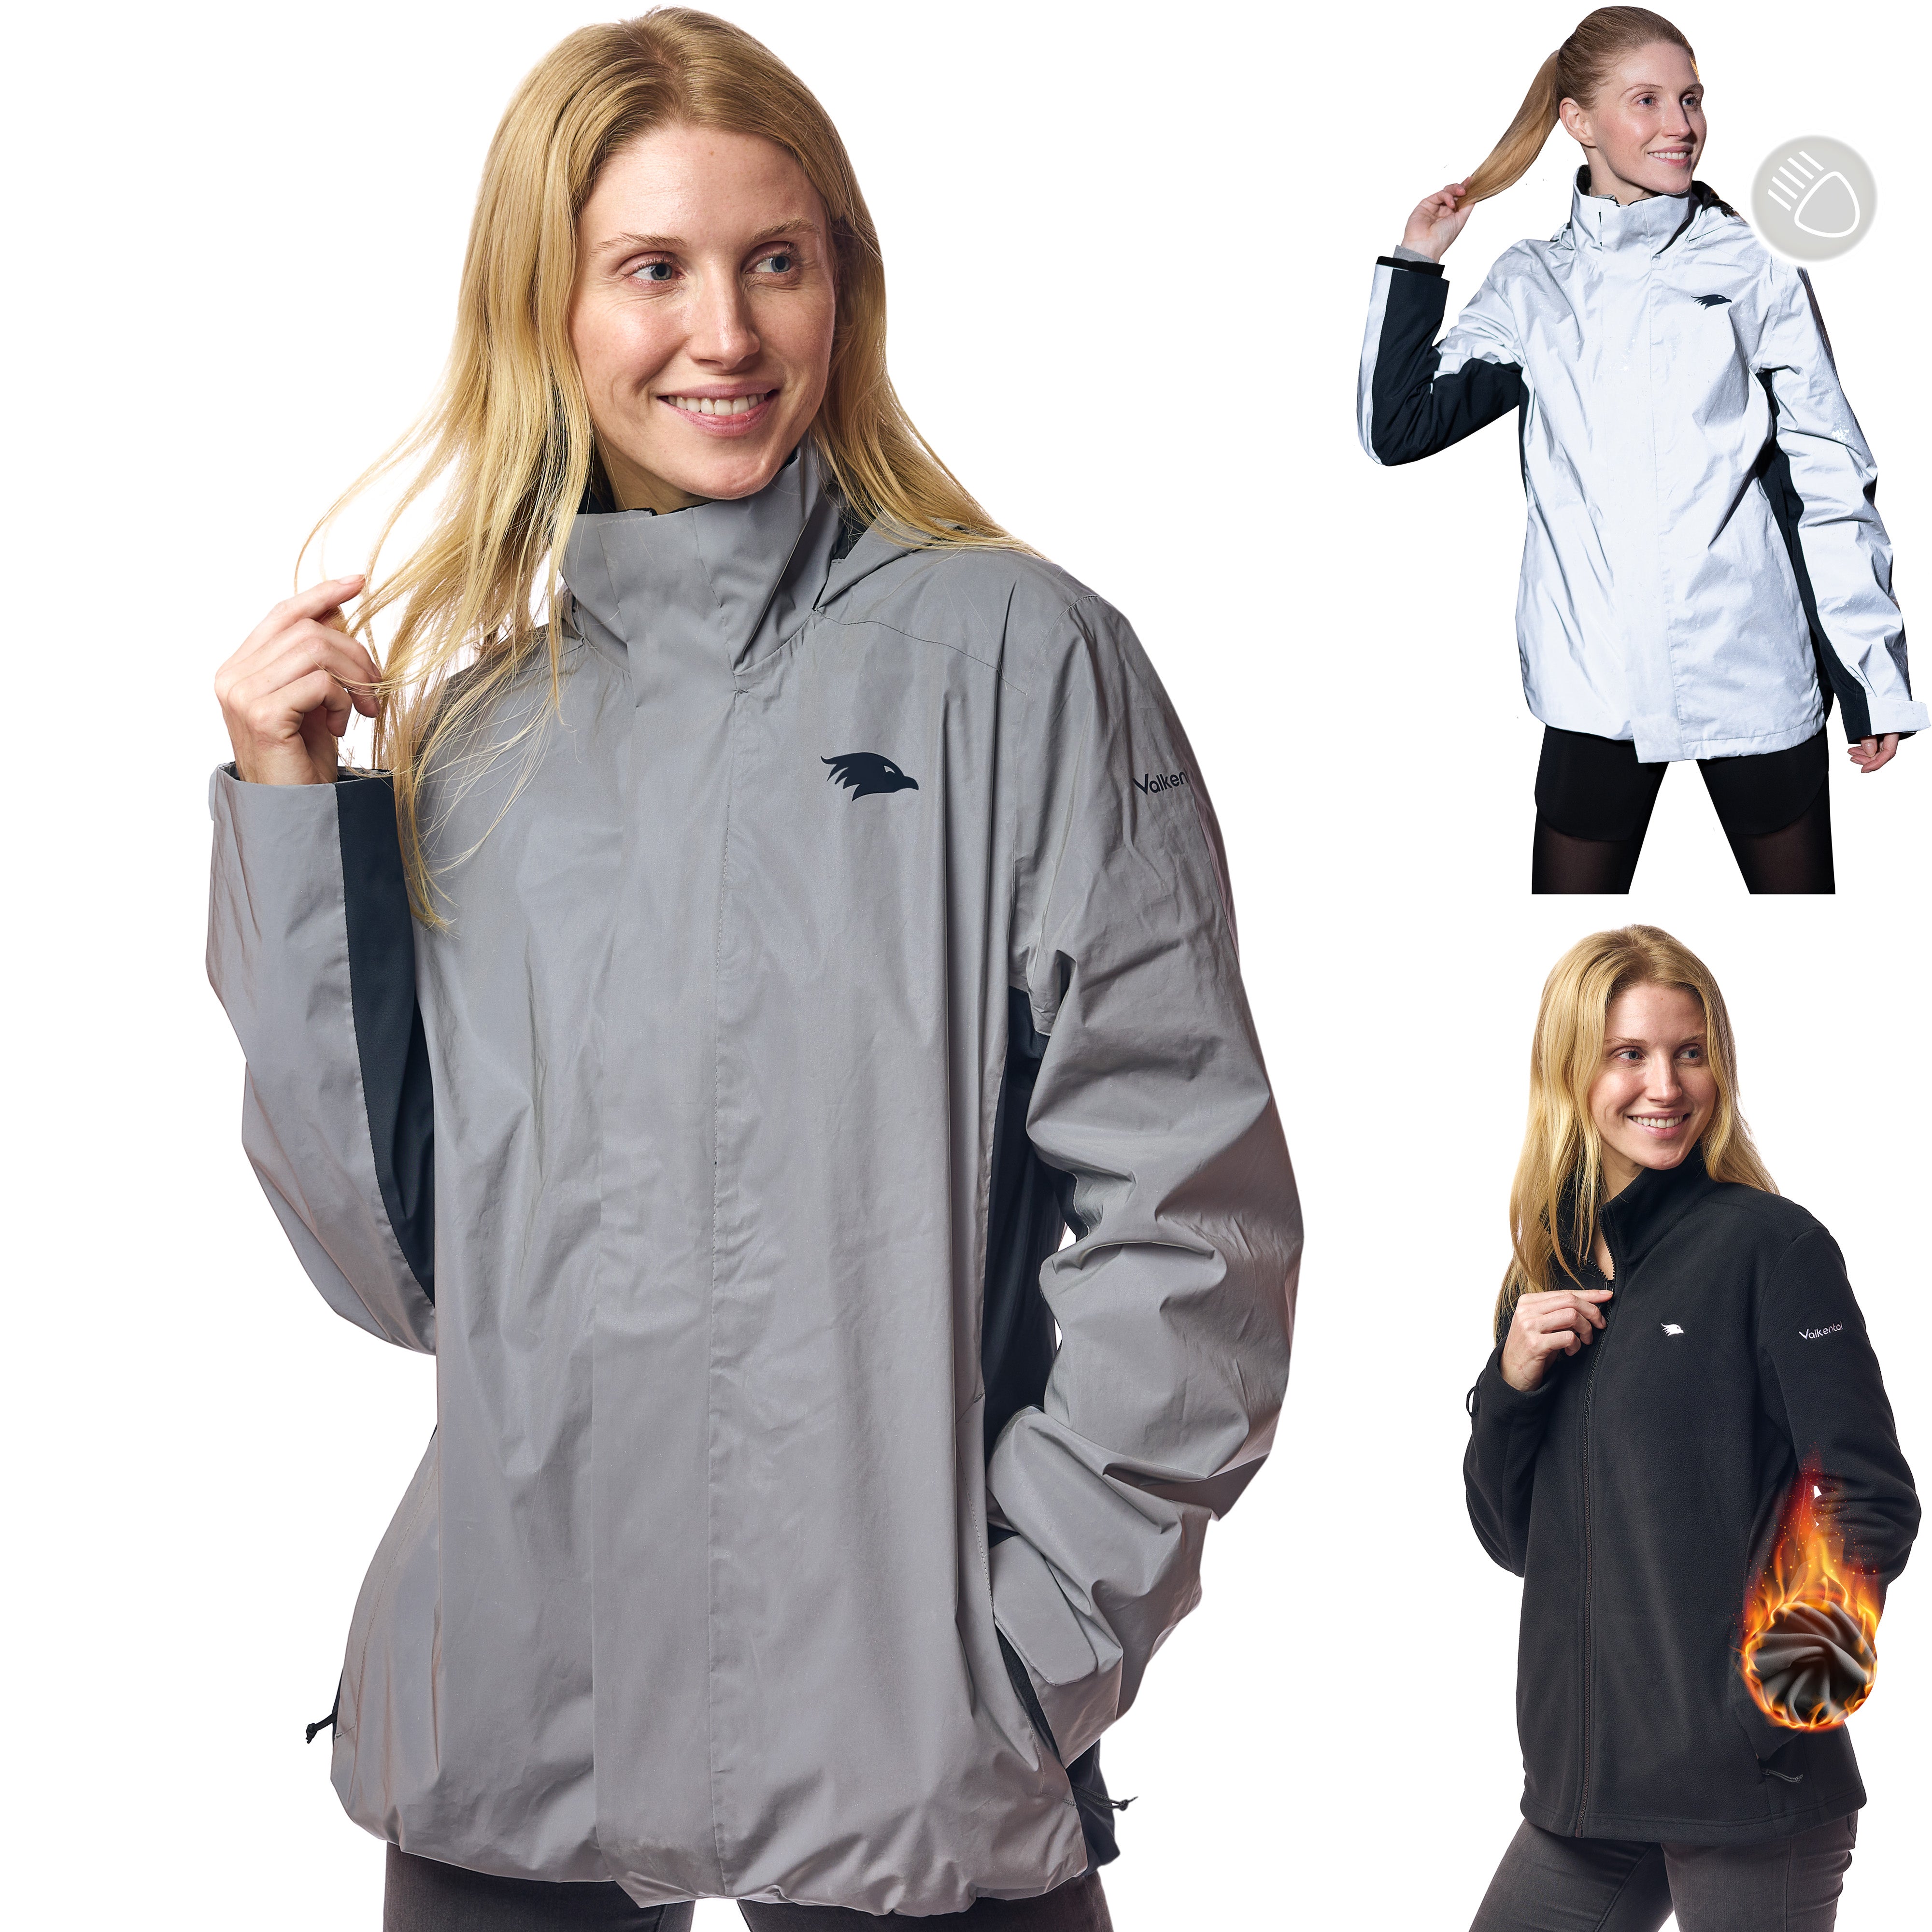 3in1 Smart Jacket - Veste imperméable avec polaire Zipp-In - Femme -  VALKENTAL.com